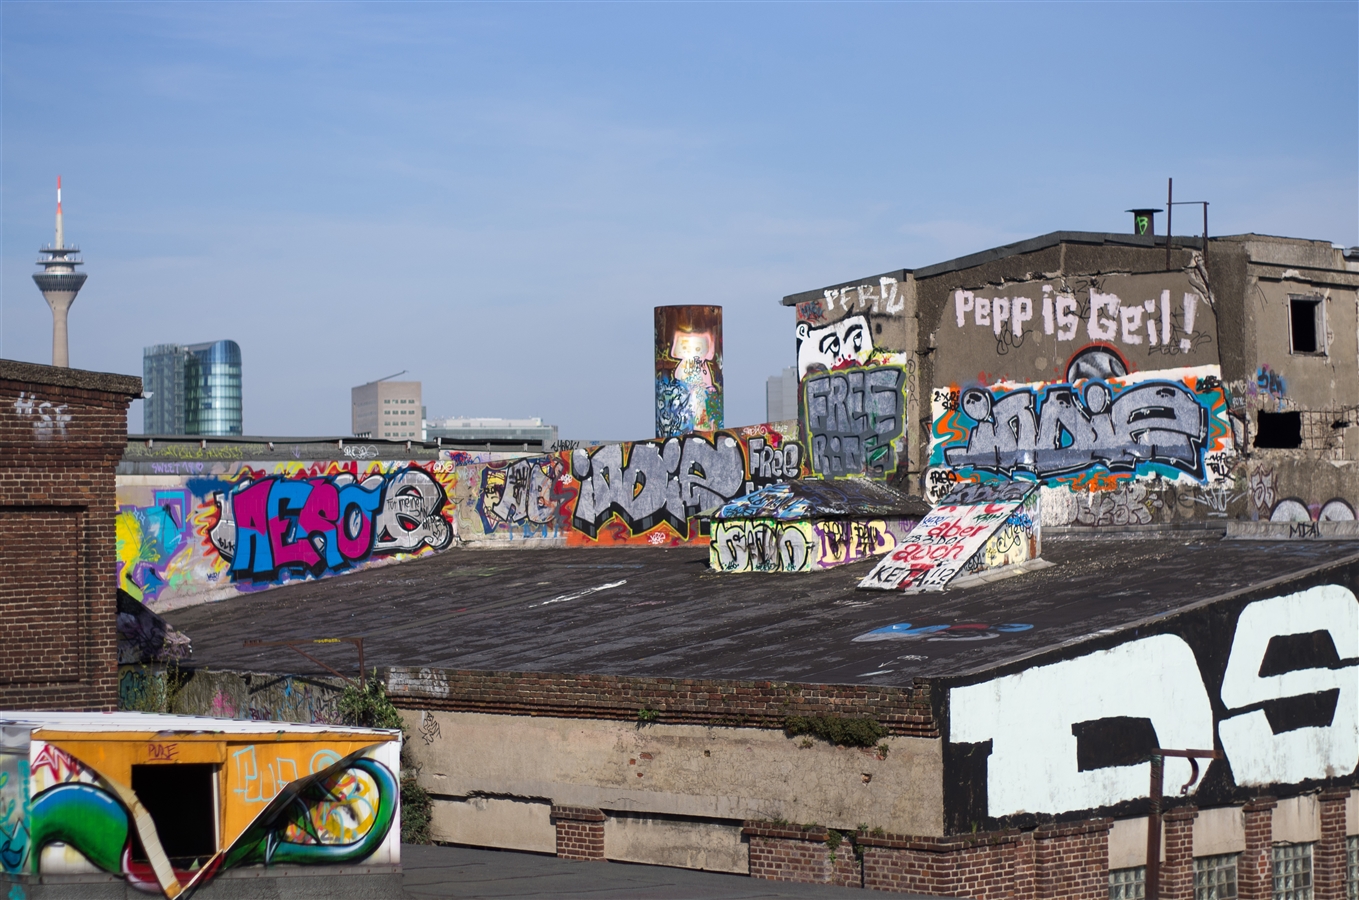 Graffiti - Pepp is geil